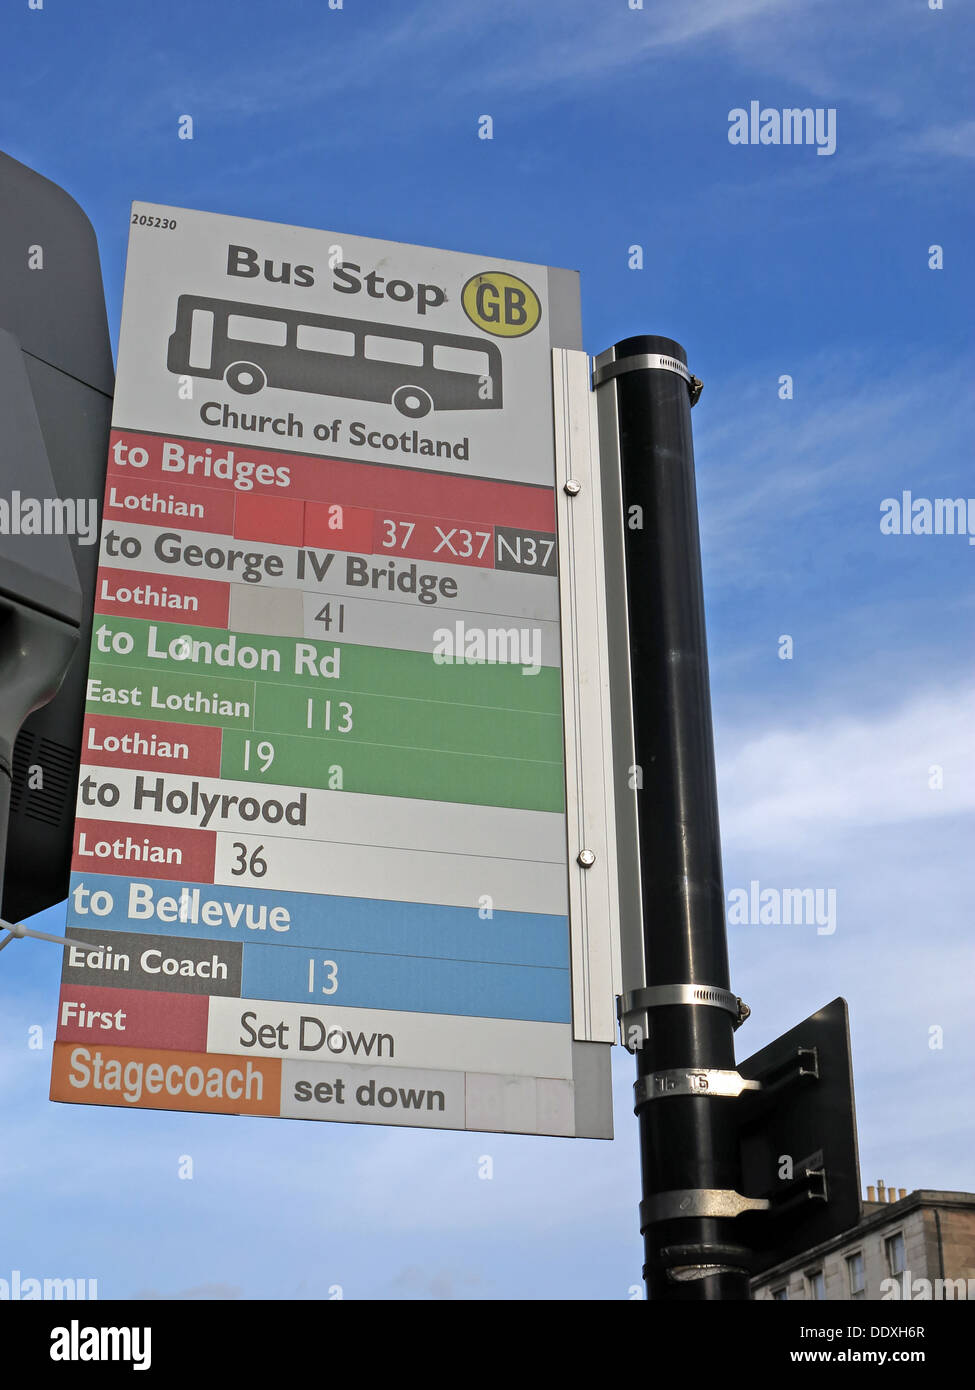 Church of Scotland - Edinburgh city bus stop, Lothian, First, Stagecoach company buses Stock Photo